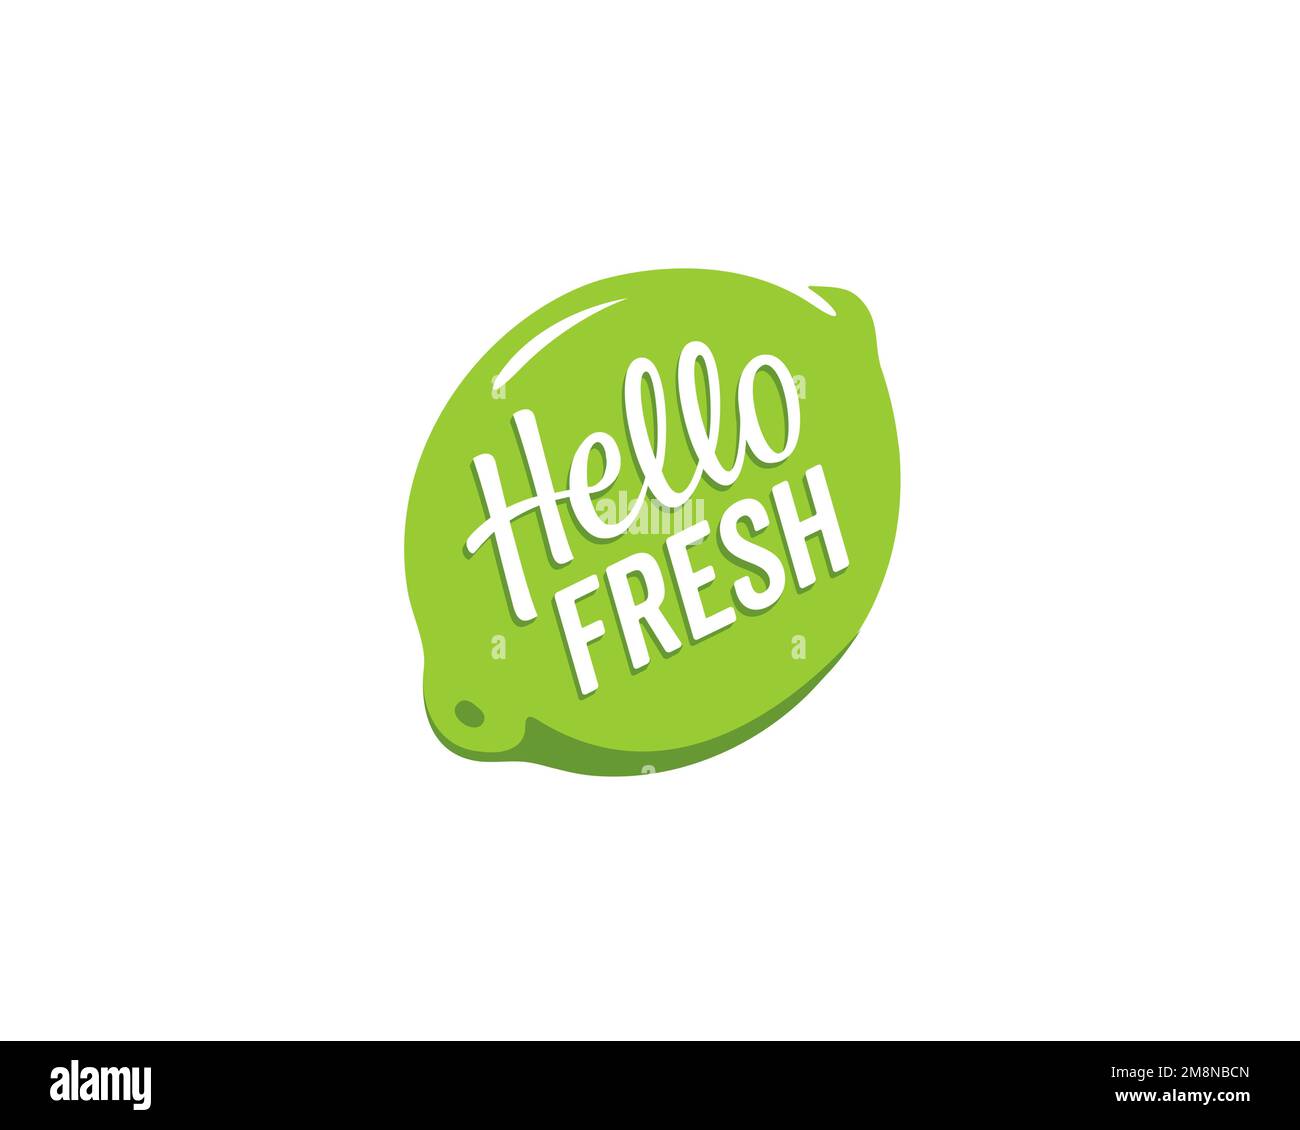 HelloFresh, rotated logo, white background Stock Photo